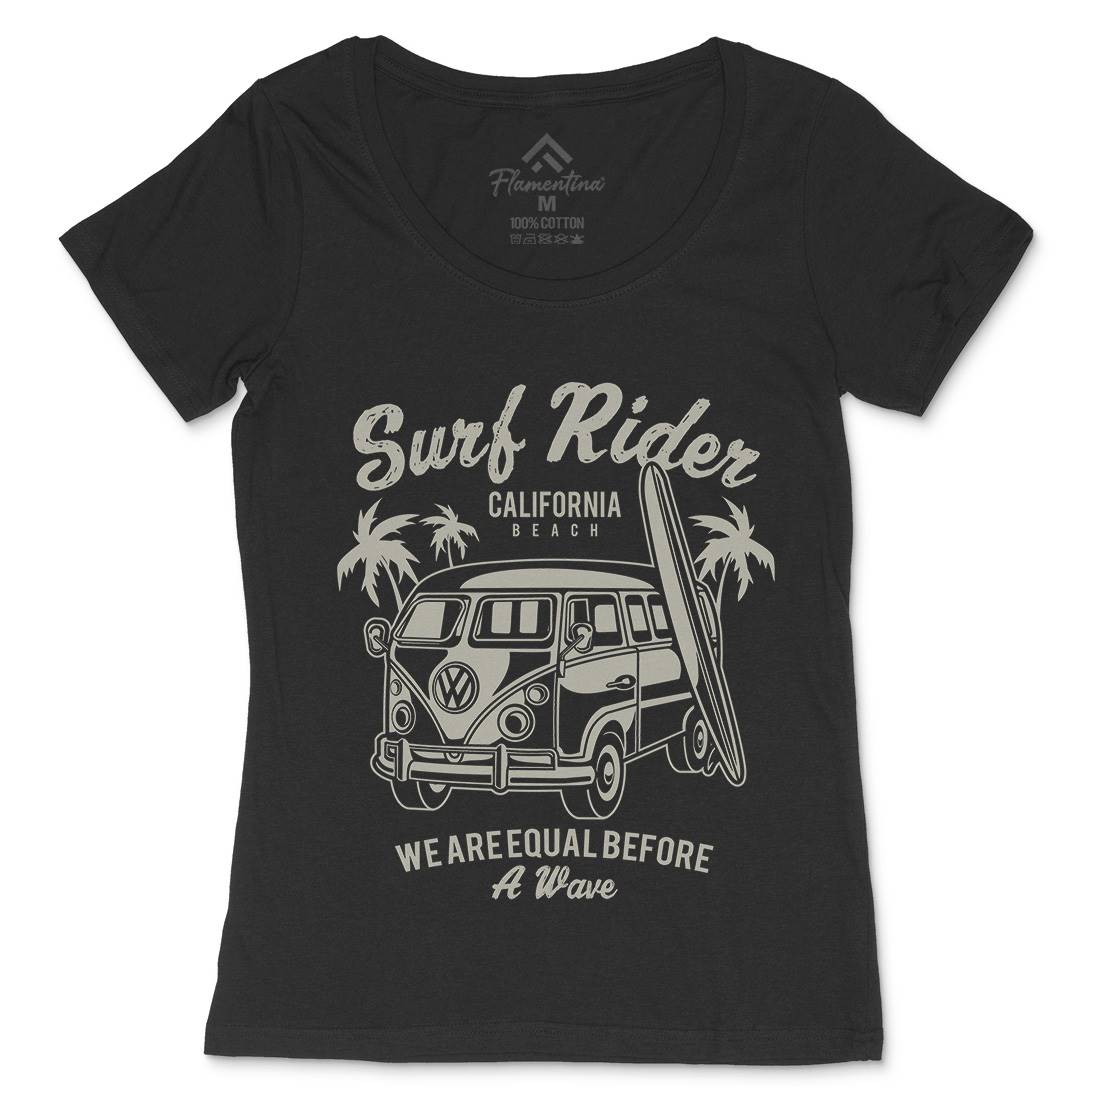 Rider Womens Scoop Neck T-Shirt Surf A169